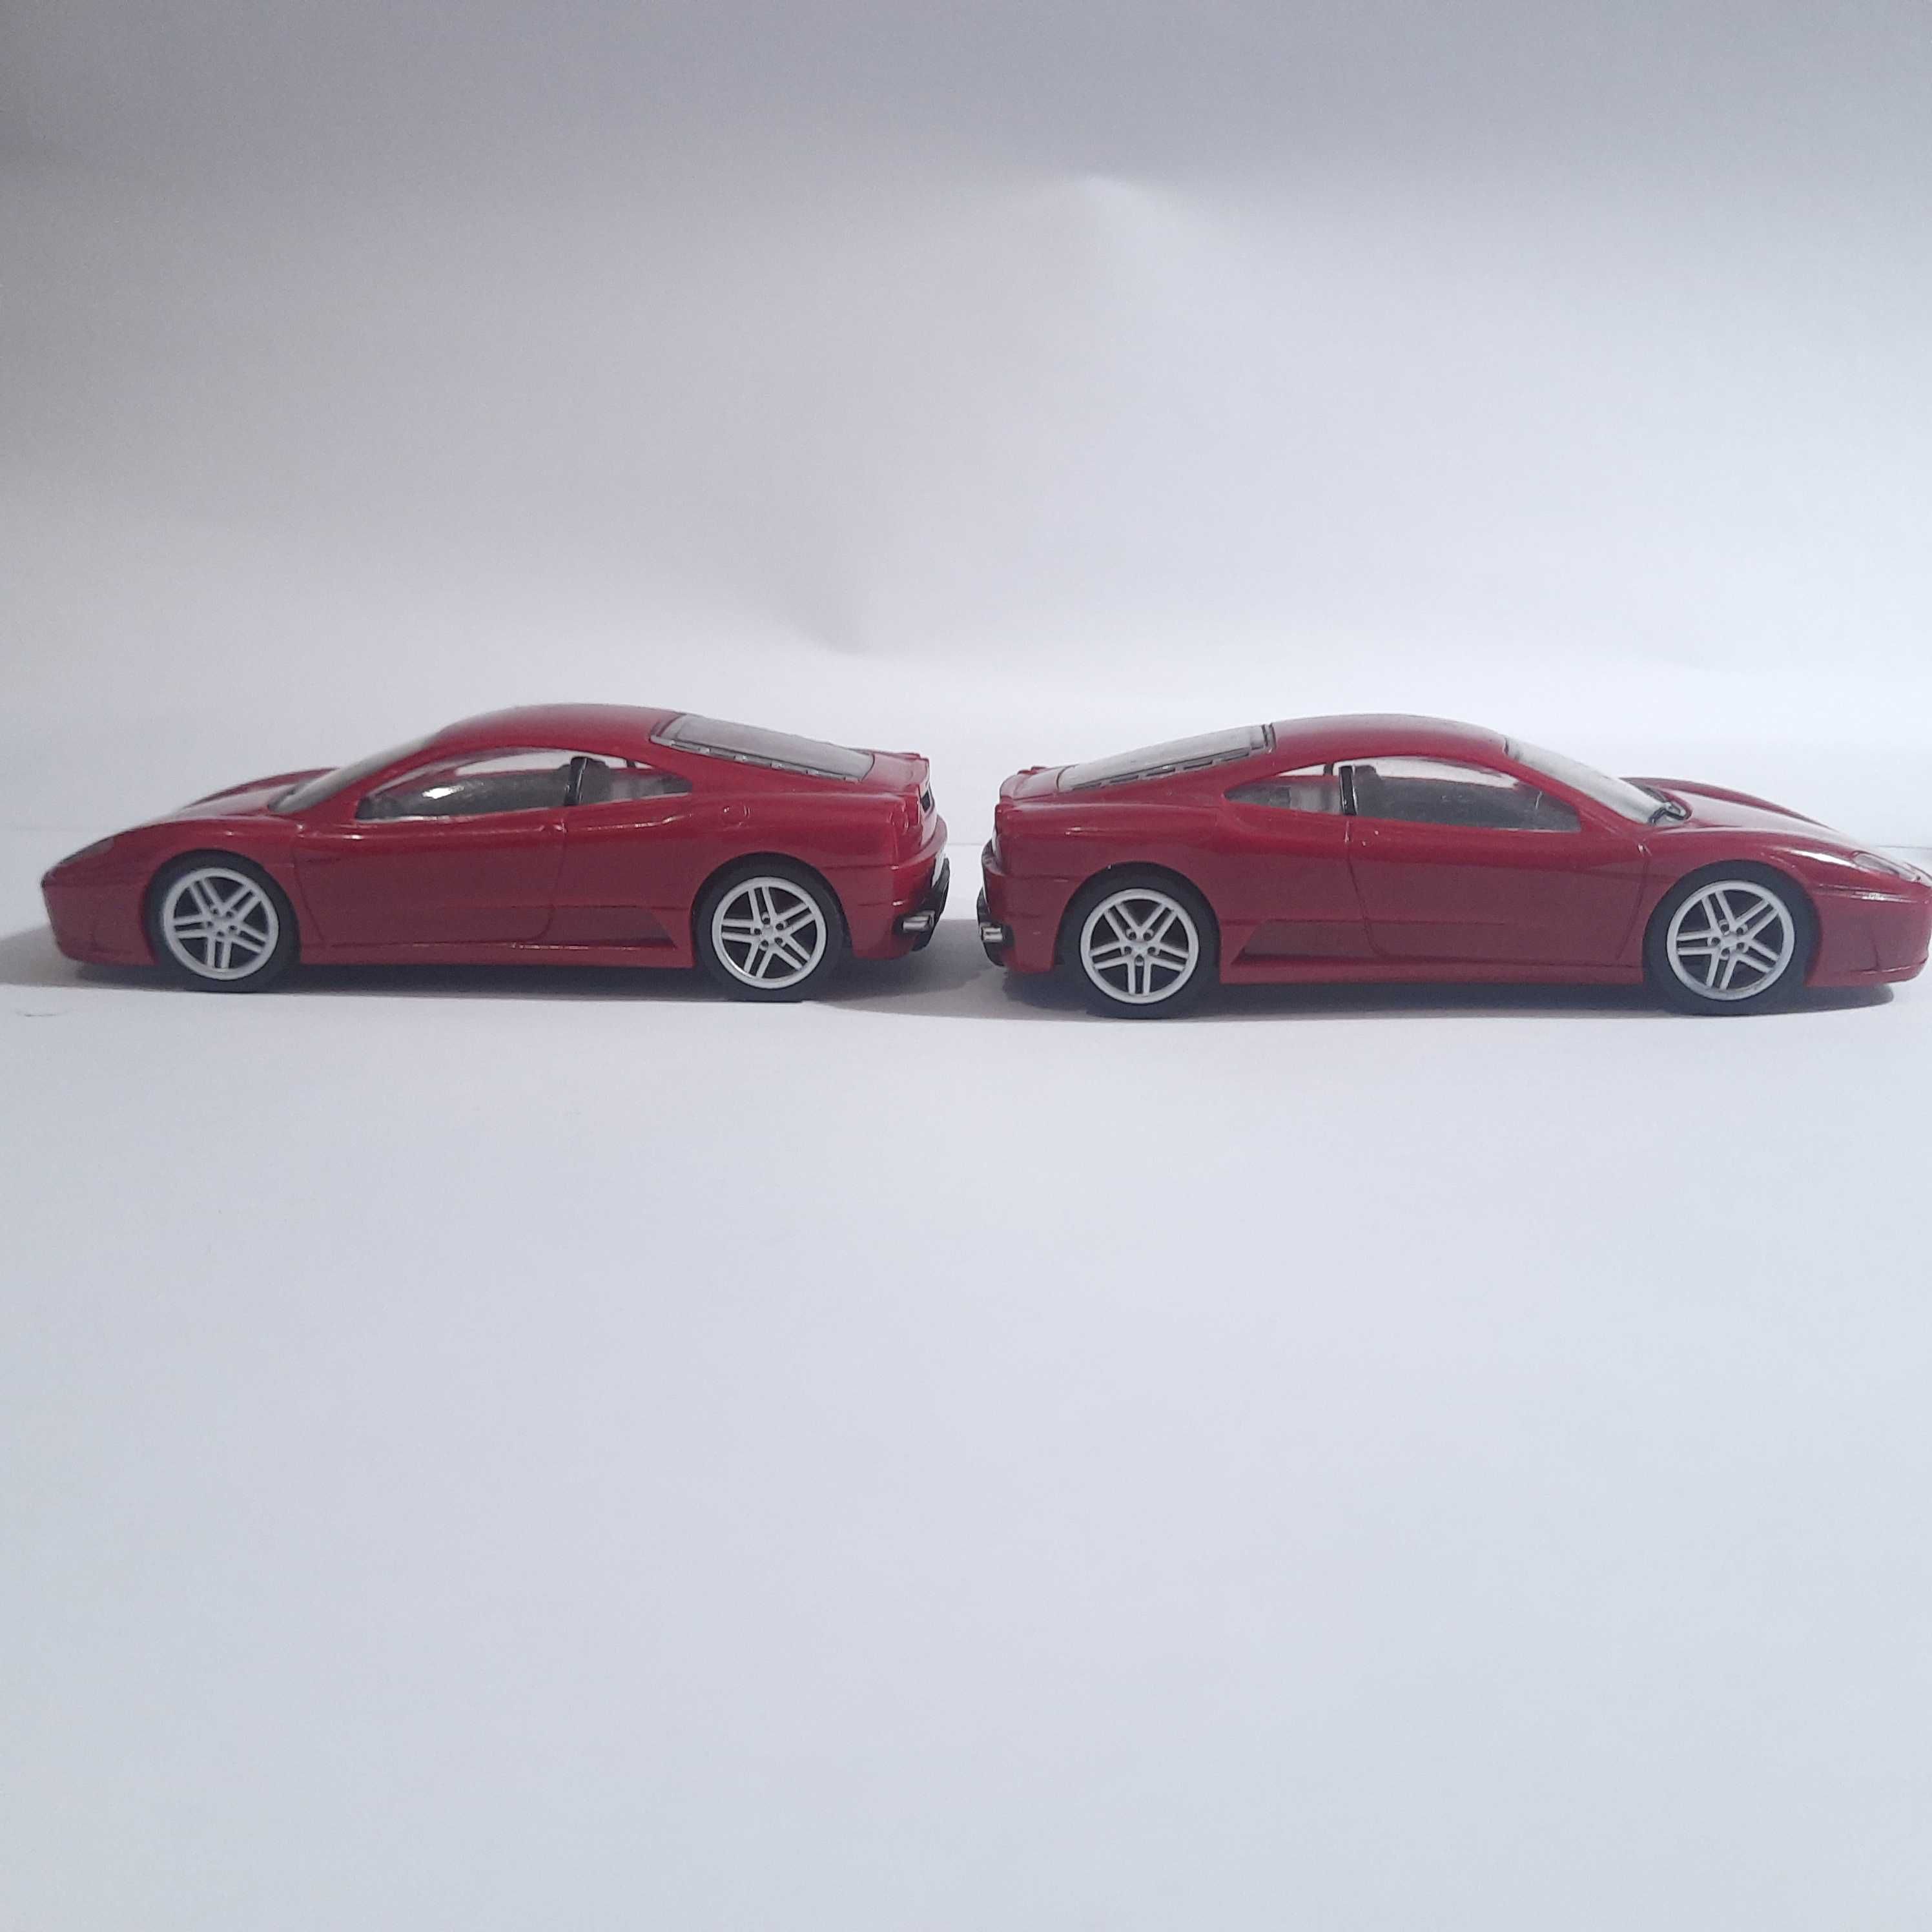 2x Hot Wheels Shell V-Power Ferrari F430 1:38